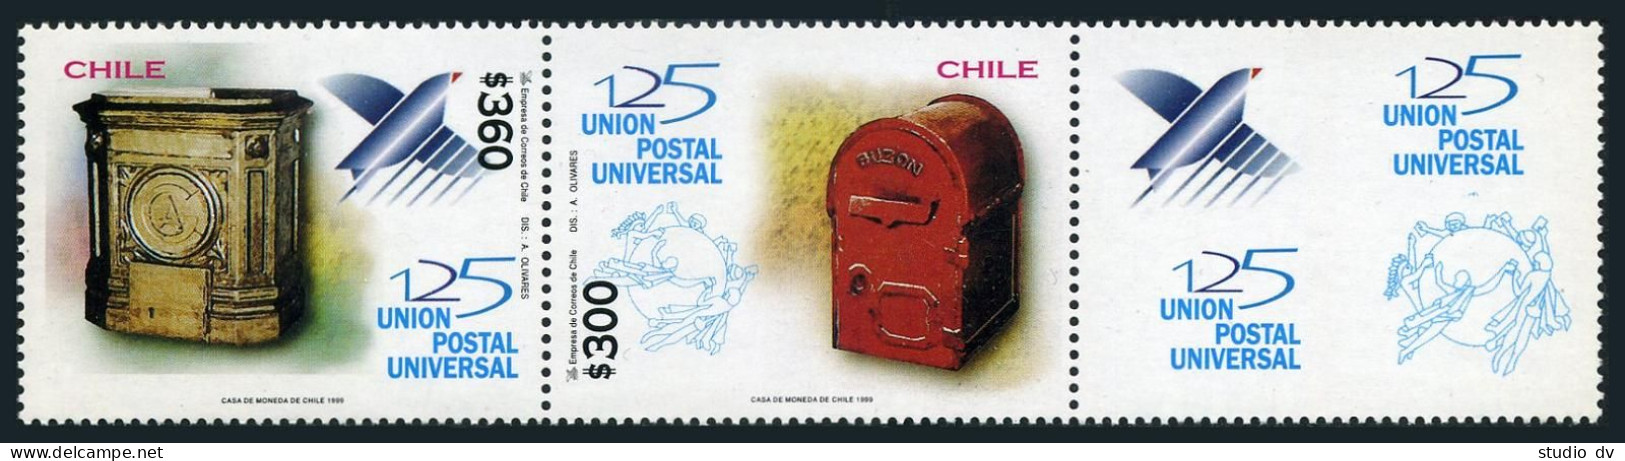 Chile 1302-1303a Pair/label, MNH. Michel 1913-1914 Zf. UPU-125, 1999. Mailbox. - Chile